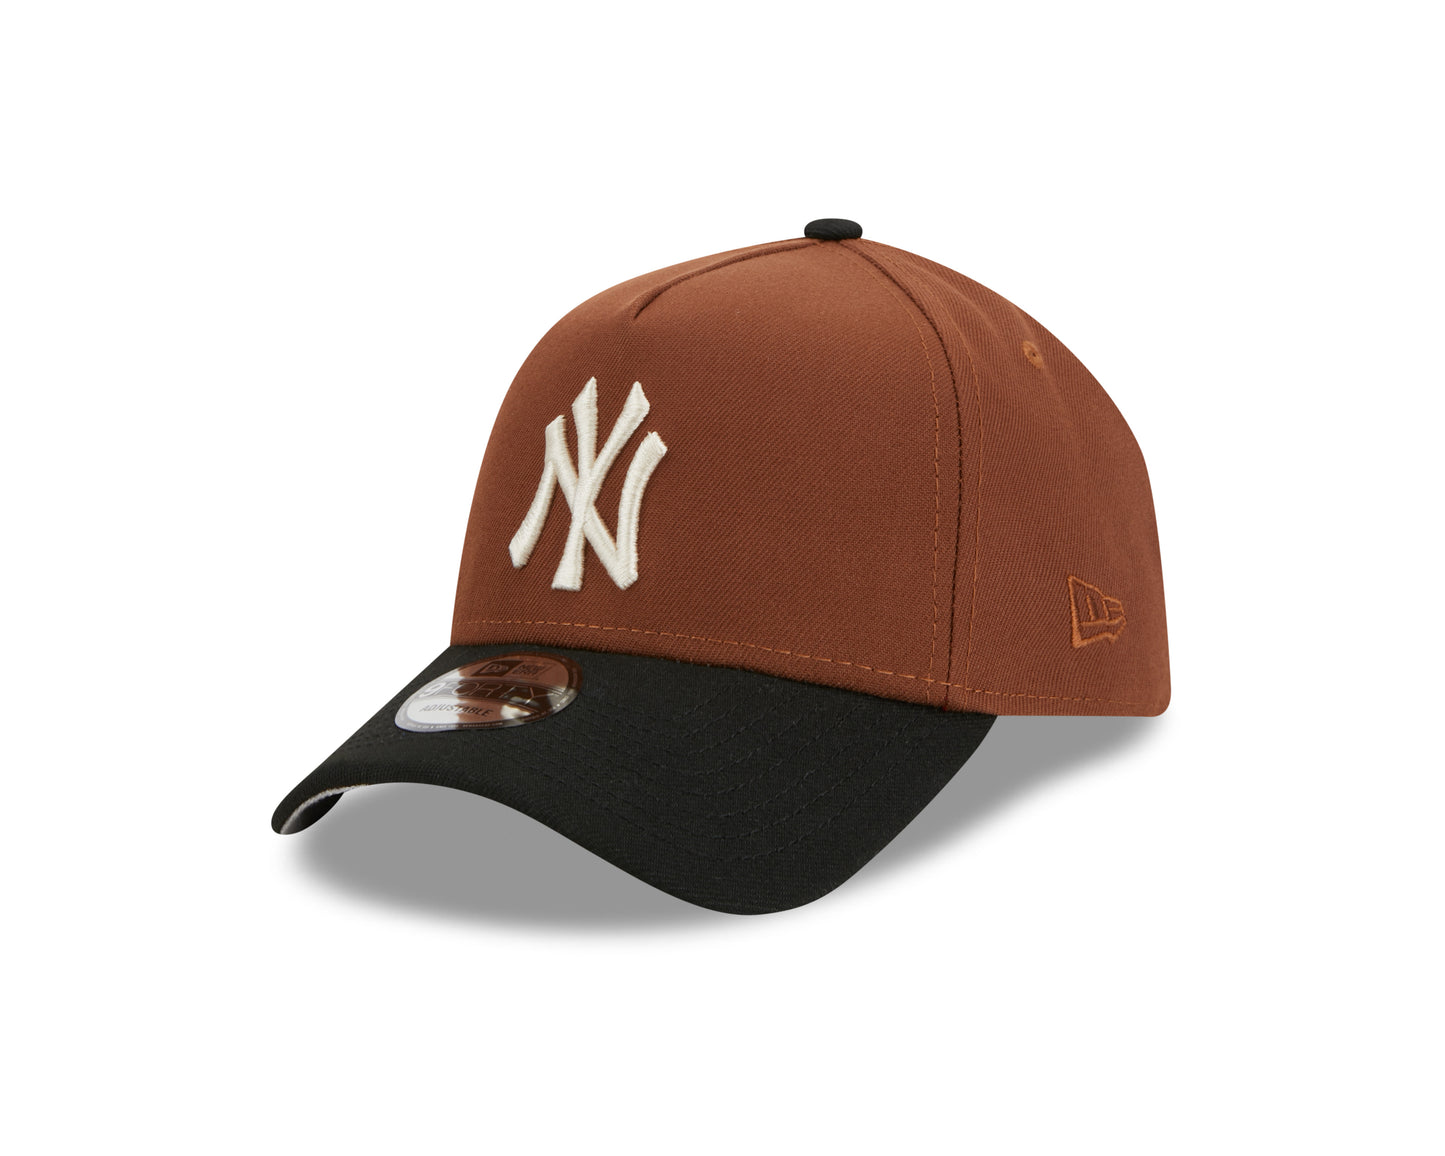 New Era - New York Yankees - HARVEST - 9forty A-Frame Cap - Brown - Headz Up 